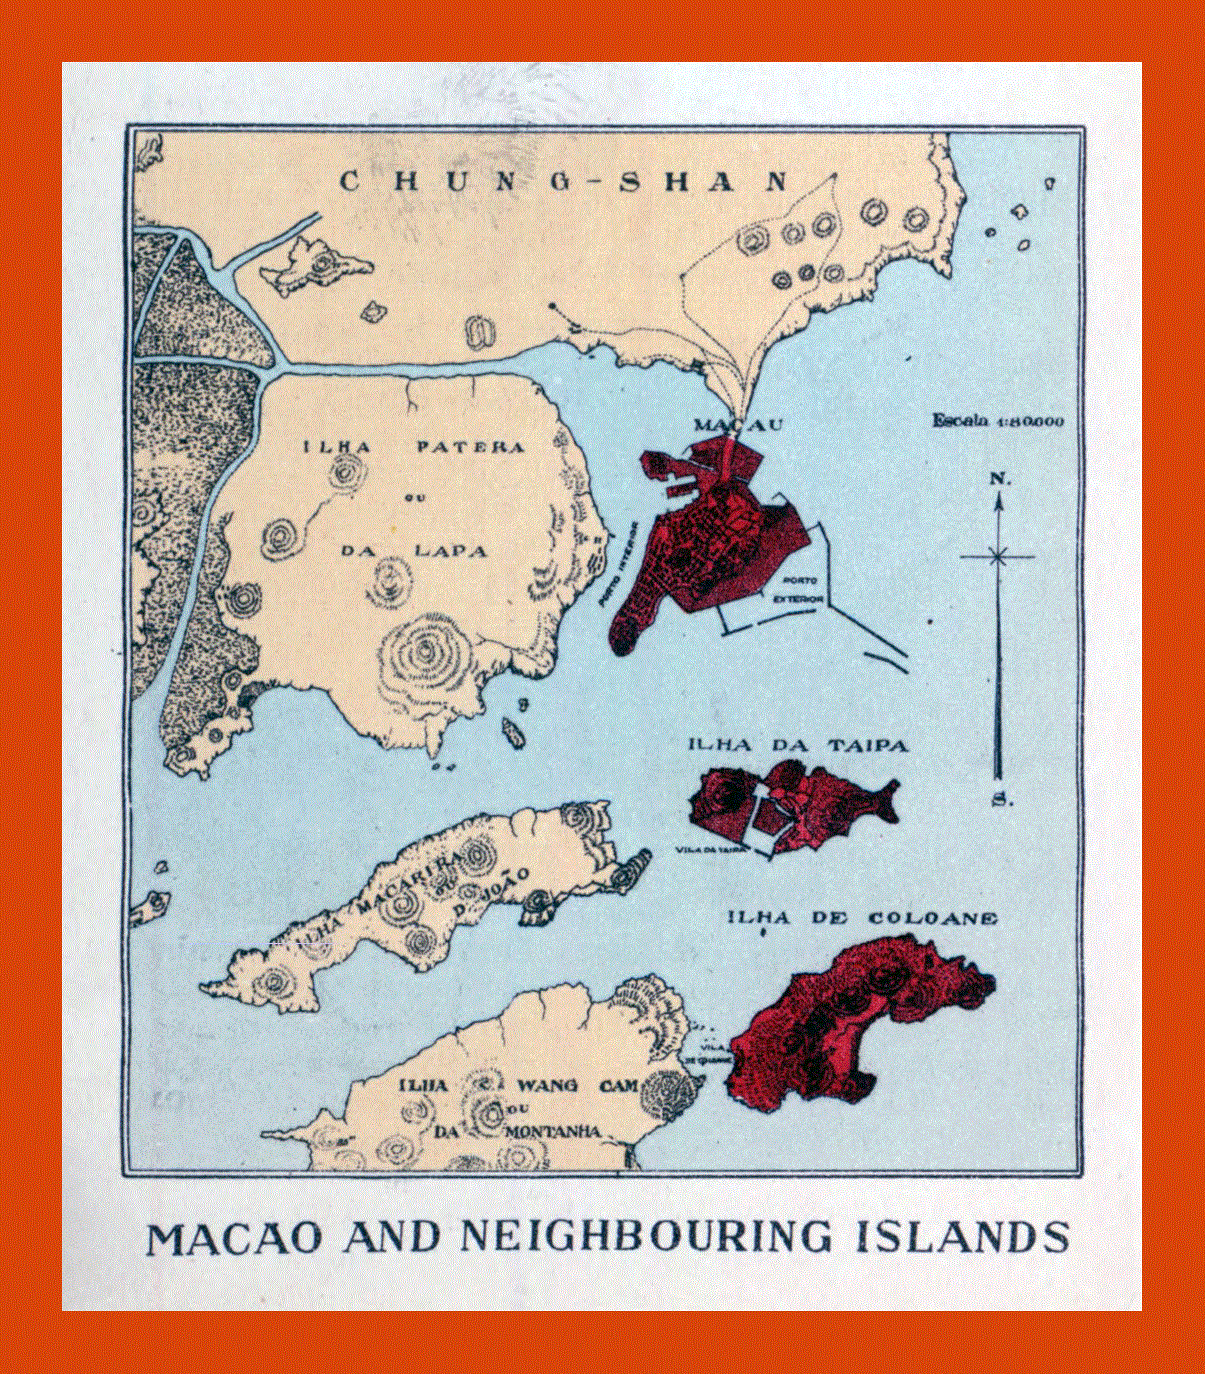 Map of Macau and neighbouring islands